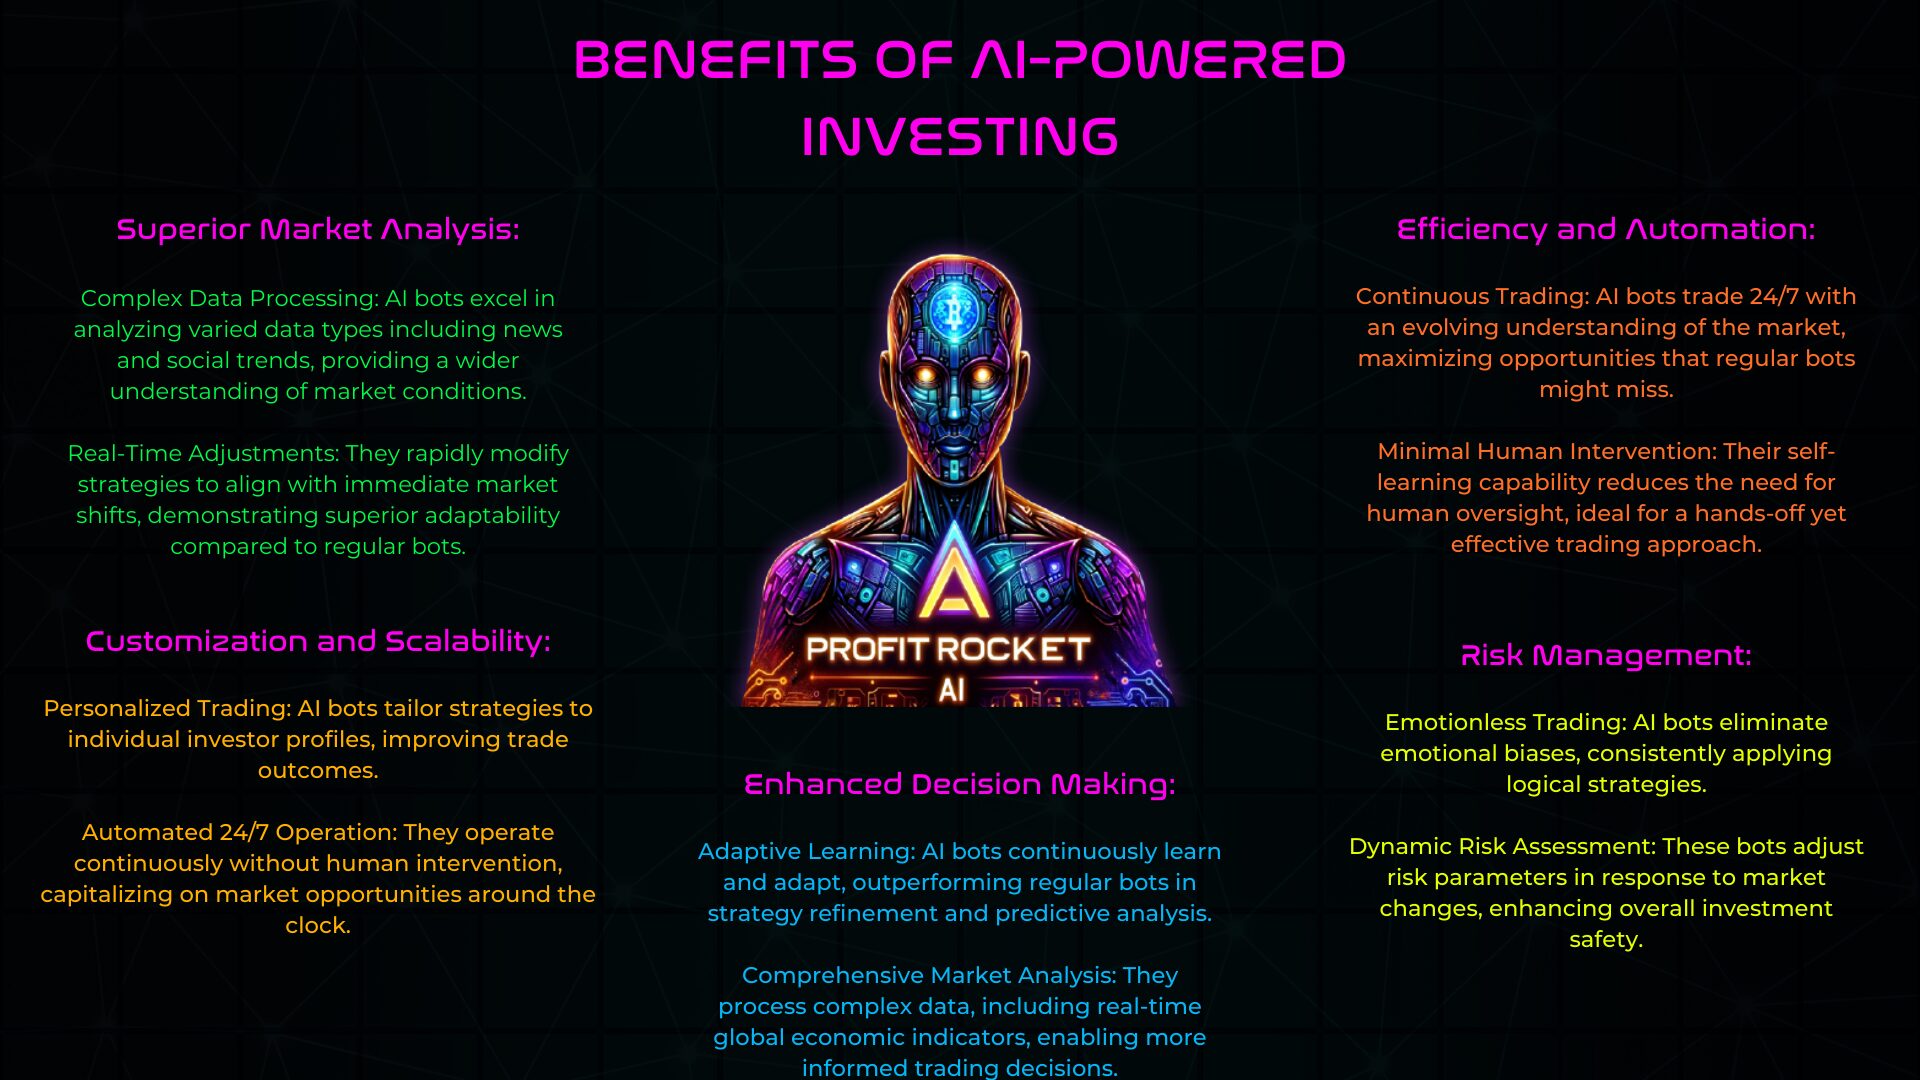 ProfitRocket AI Pitch Deck Page 6 - Benefits of AI Investing